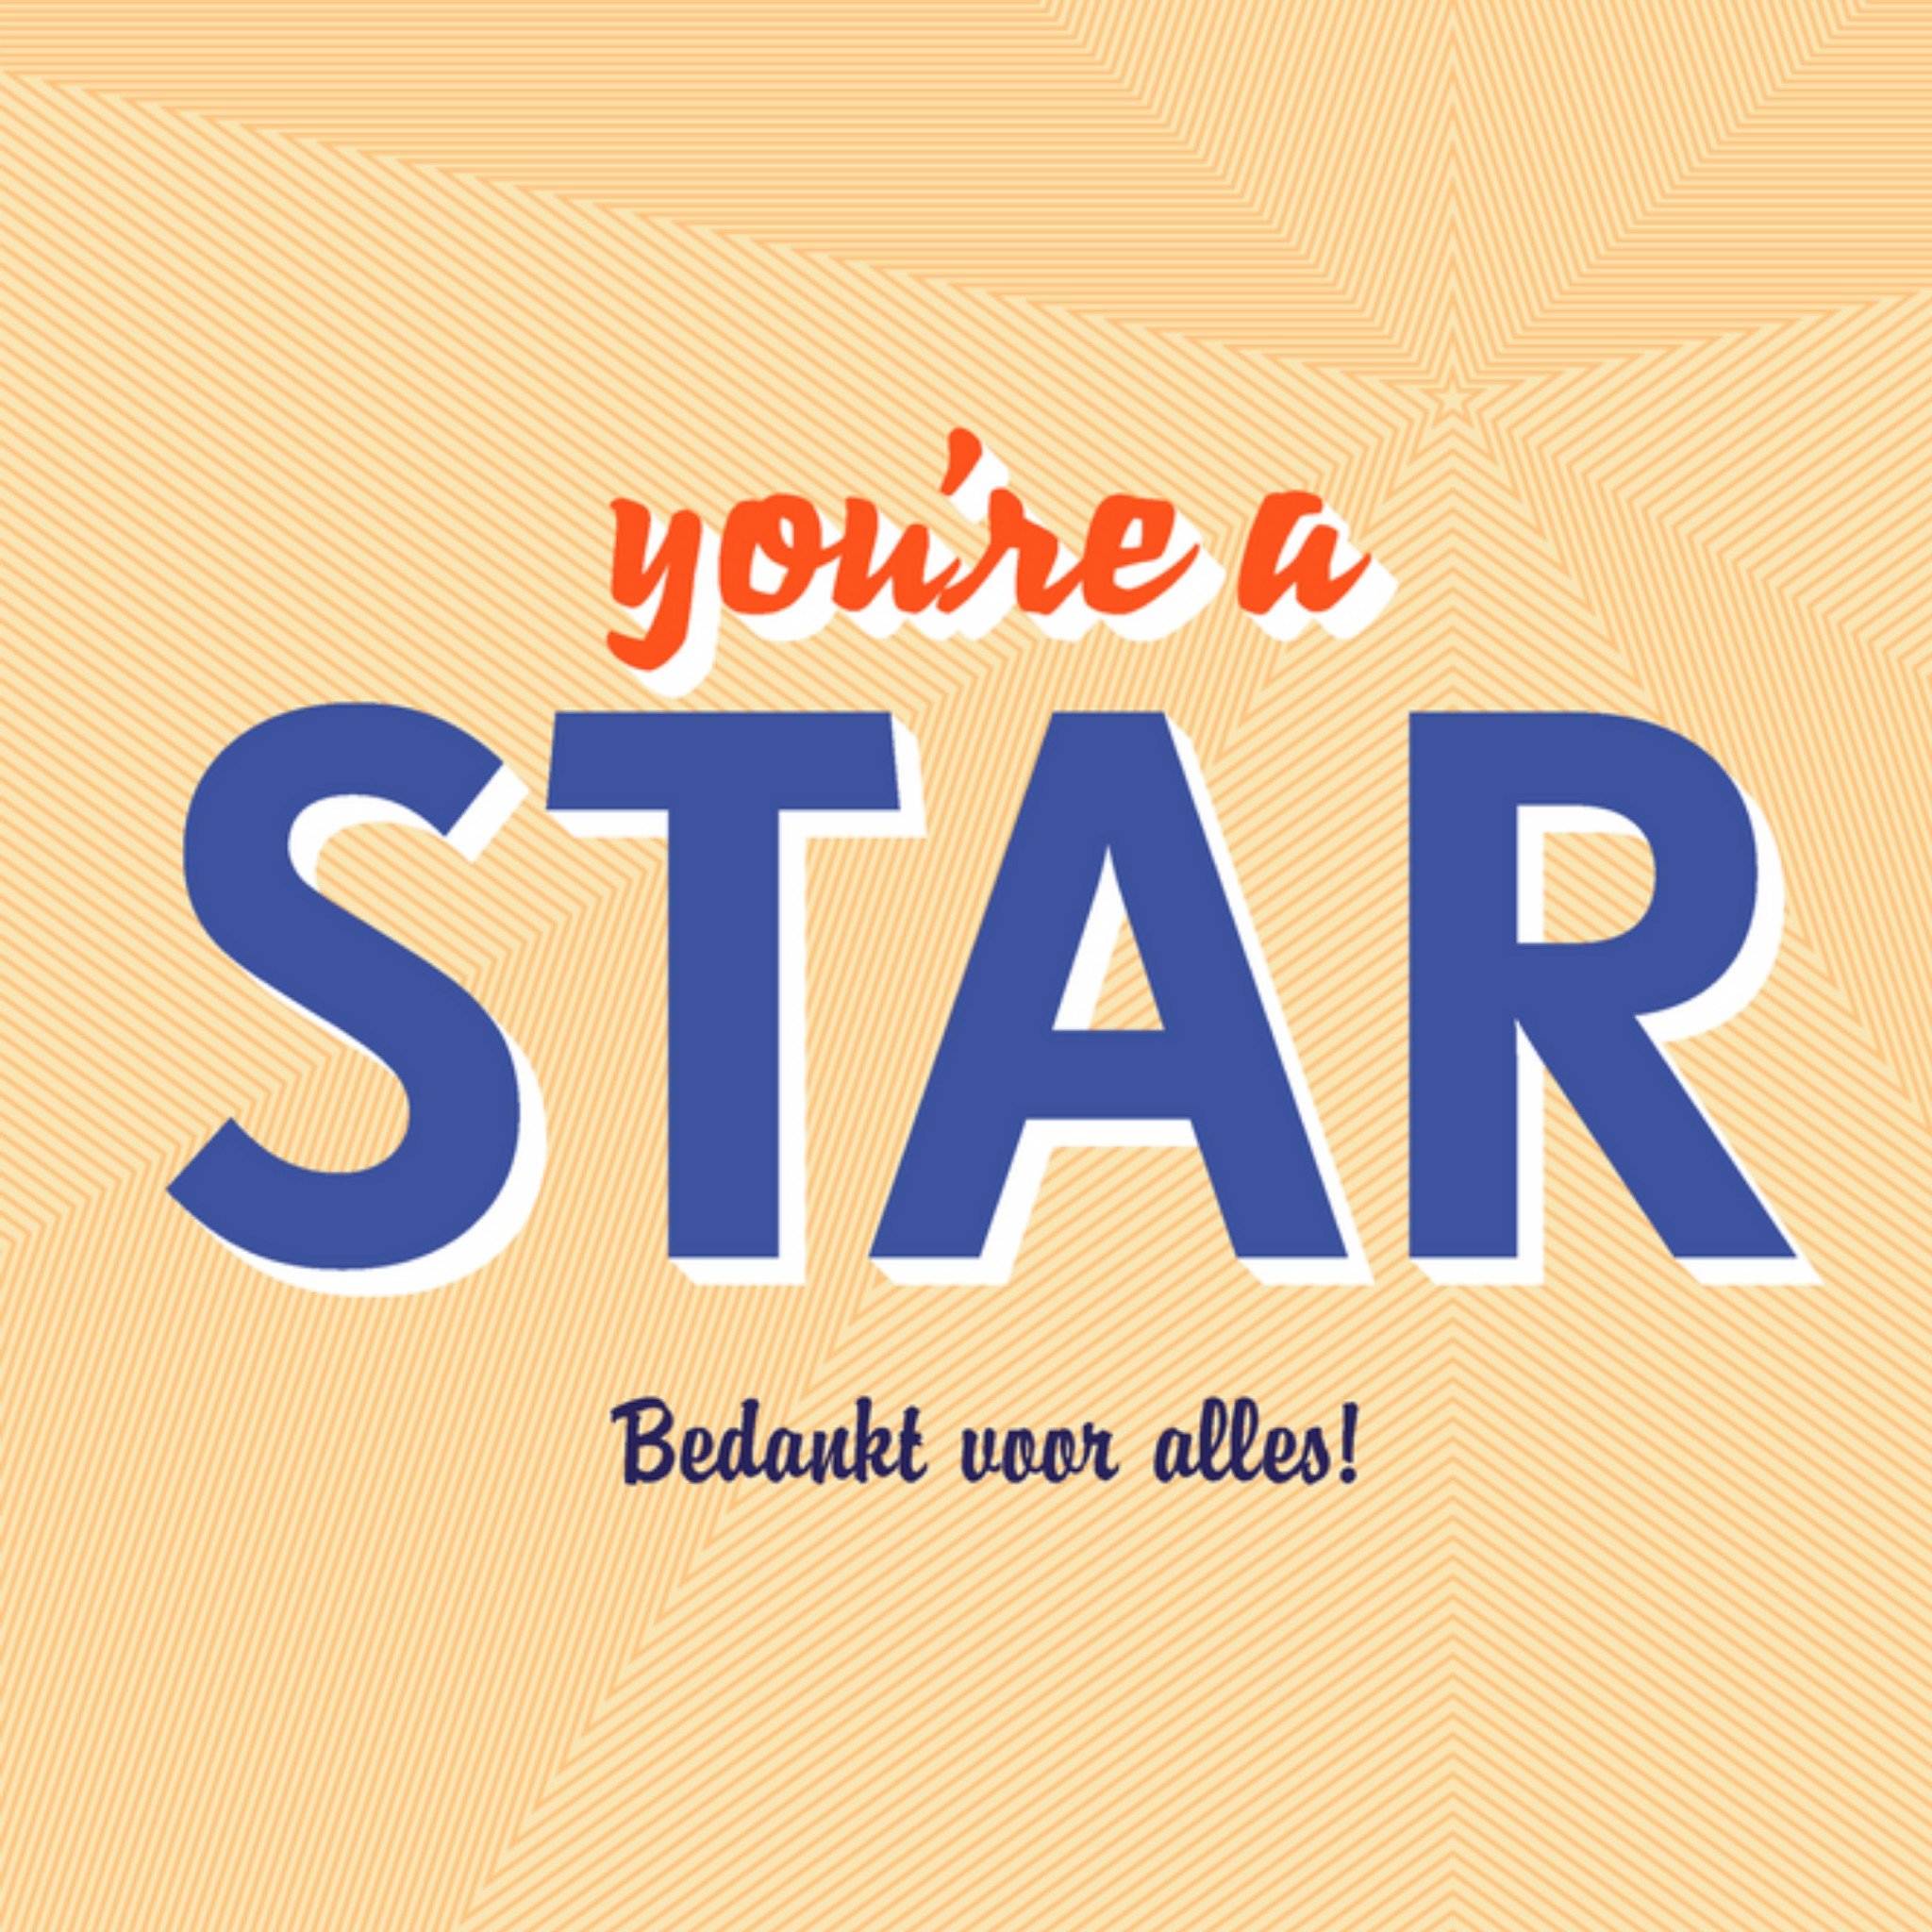 Pensioen kaart - You're a star